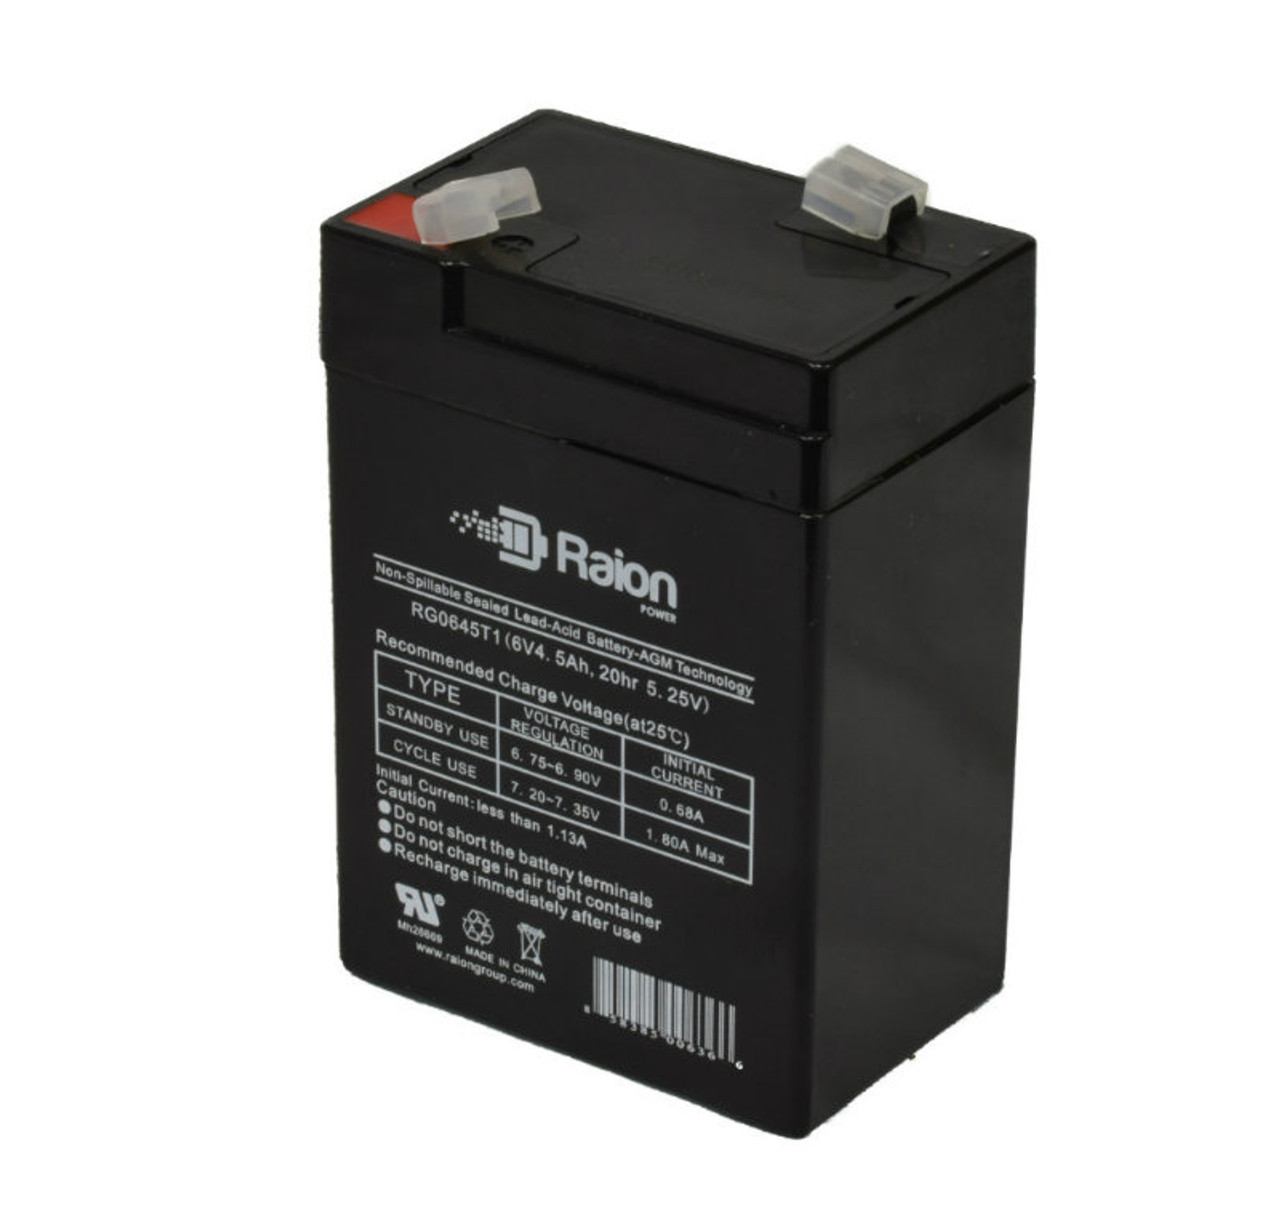 Raion Power RG0645T1 6V 4.5Ah Replacement Battery Cartridge for Hi-Light 3901